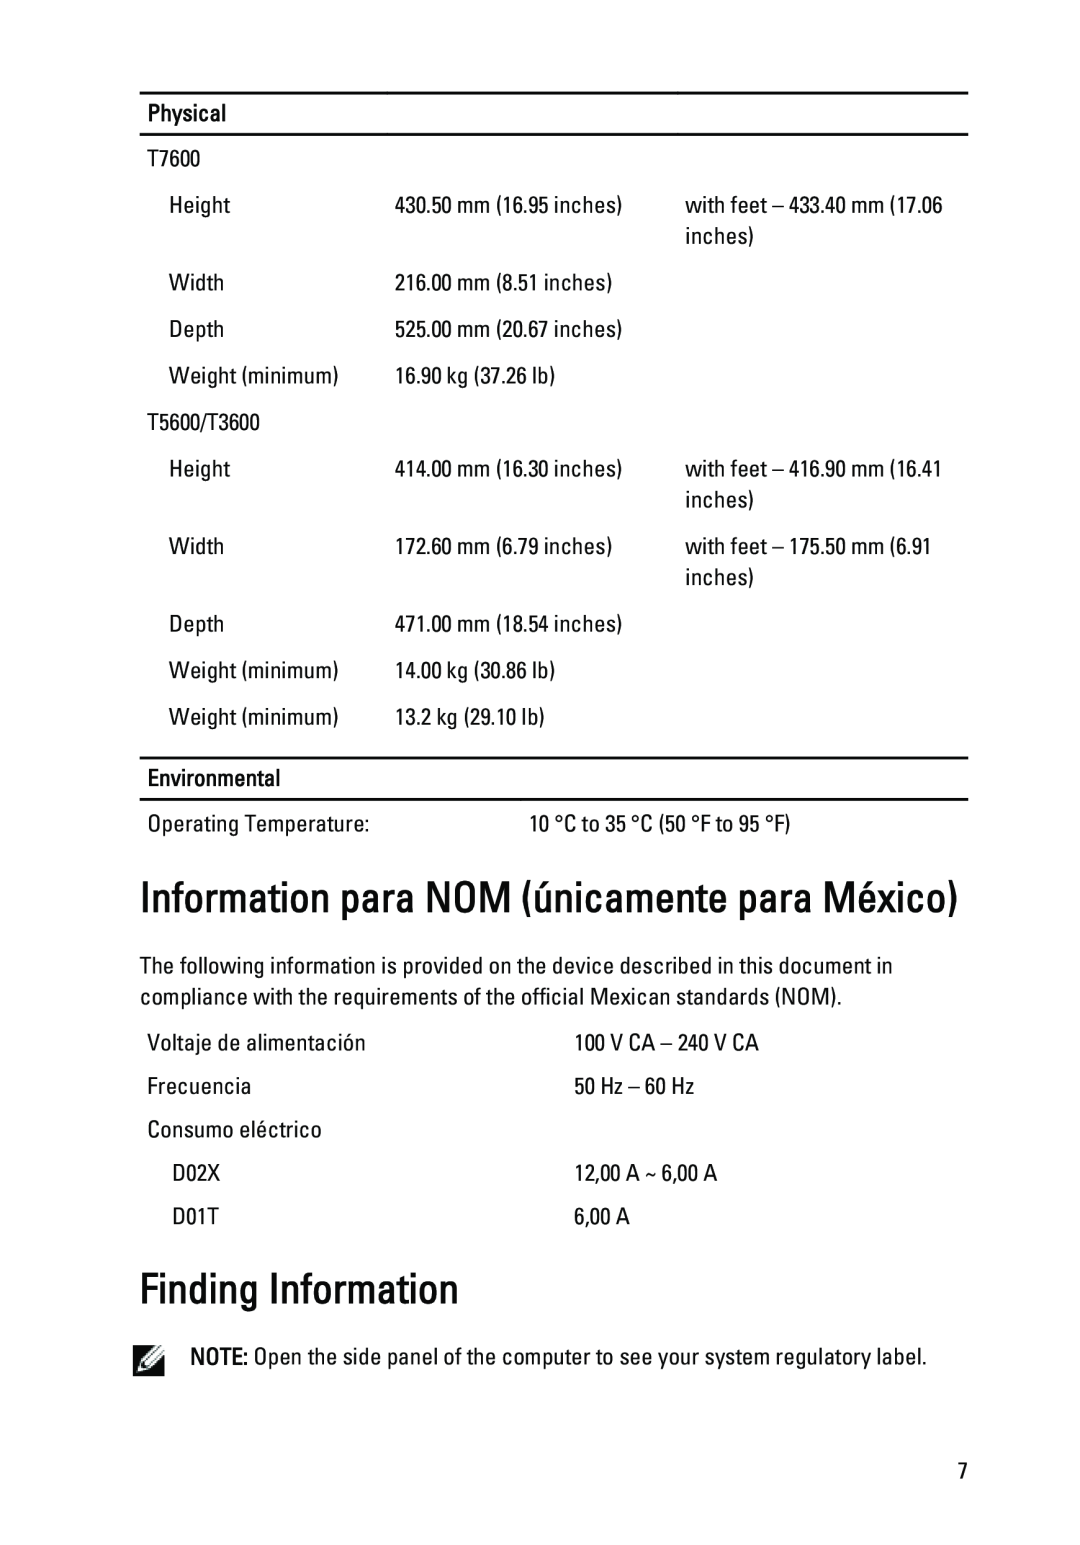 Dell T3600, T5600 manual Information para NOM únicamente para México, Finding Information, Physical, Environmental 